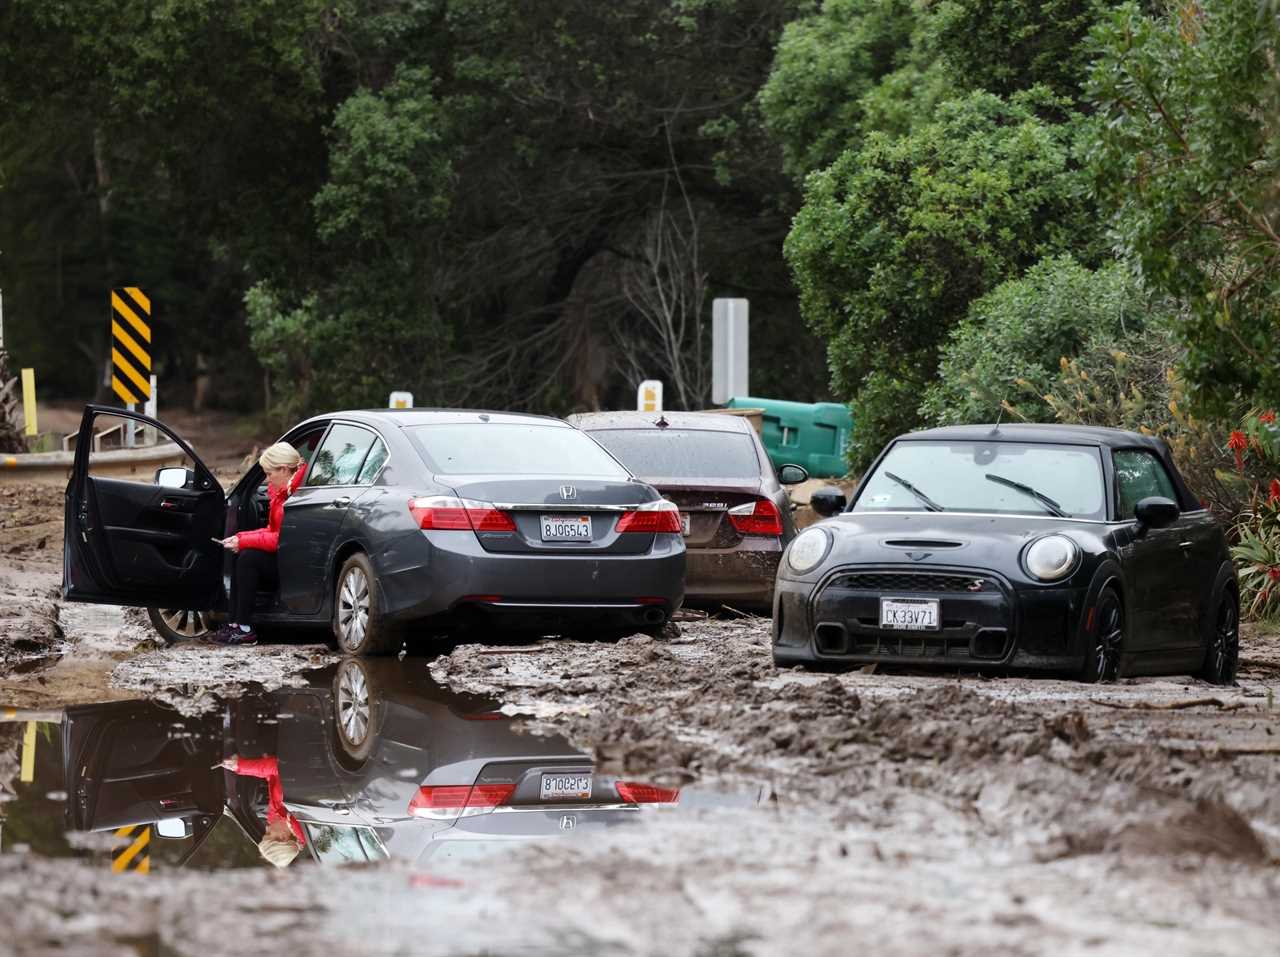 Kourtney Kardashian & Travis Barker’s $15M Santa Barbara beach house devastated by raging storm floods in scary new pics